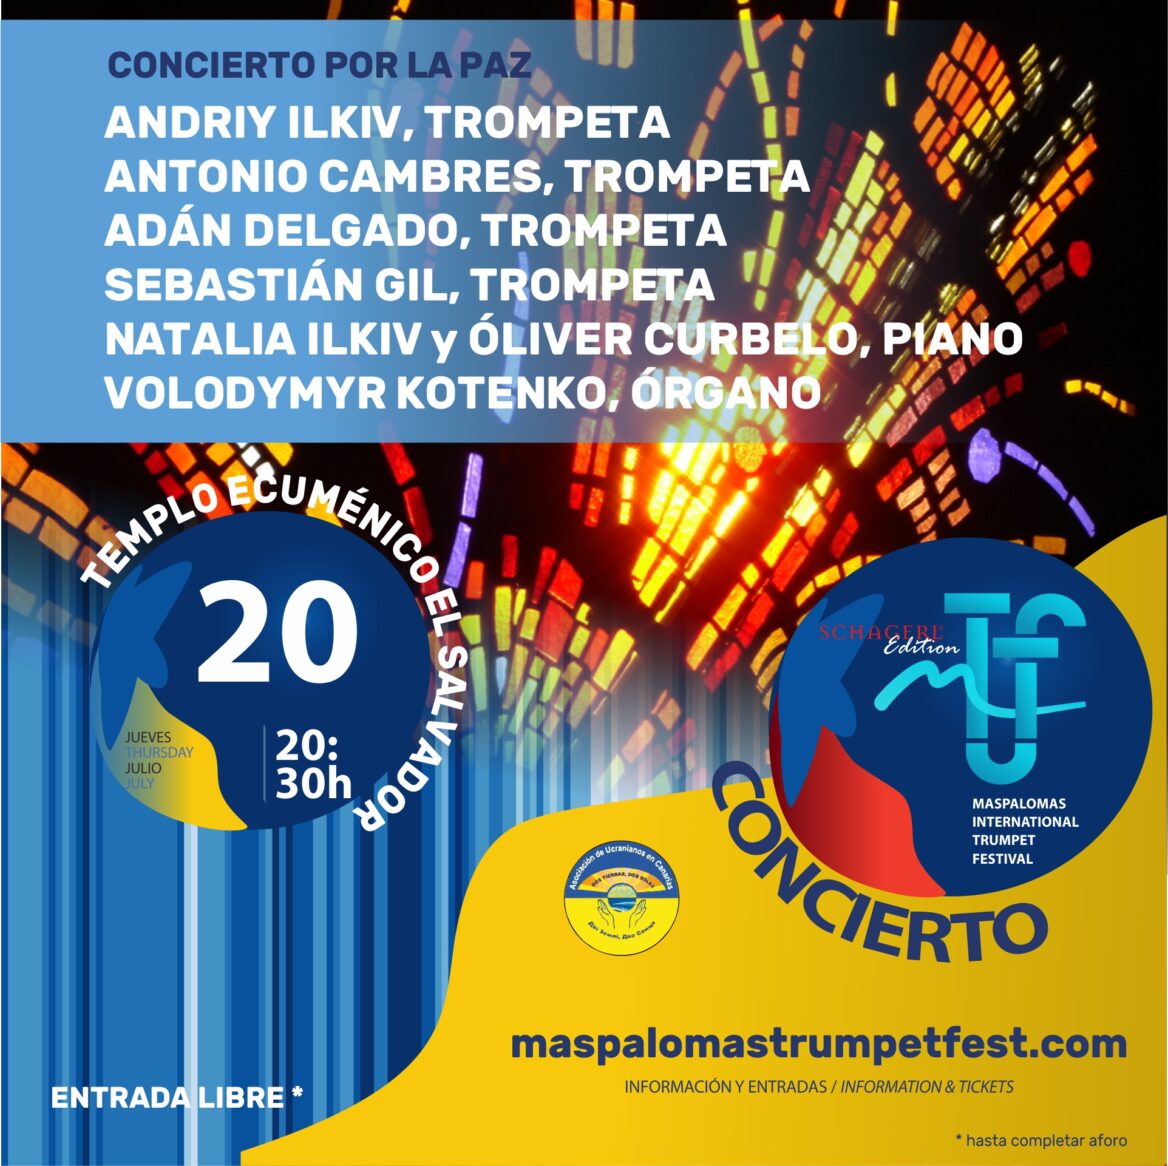 Concert for peace Maspalomas International Trumpet Festival